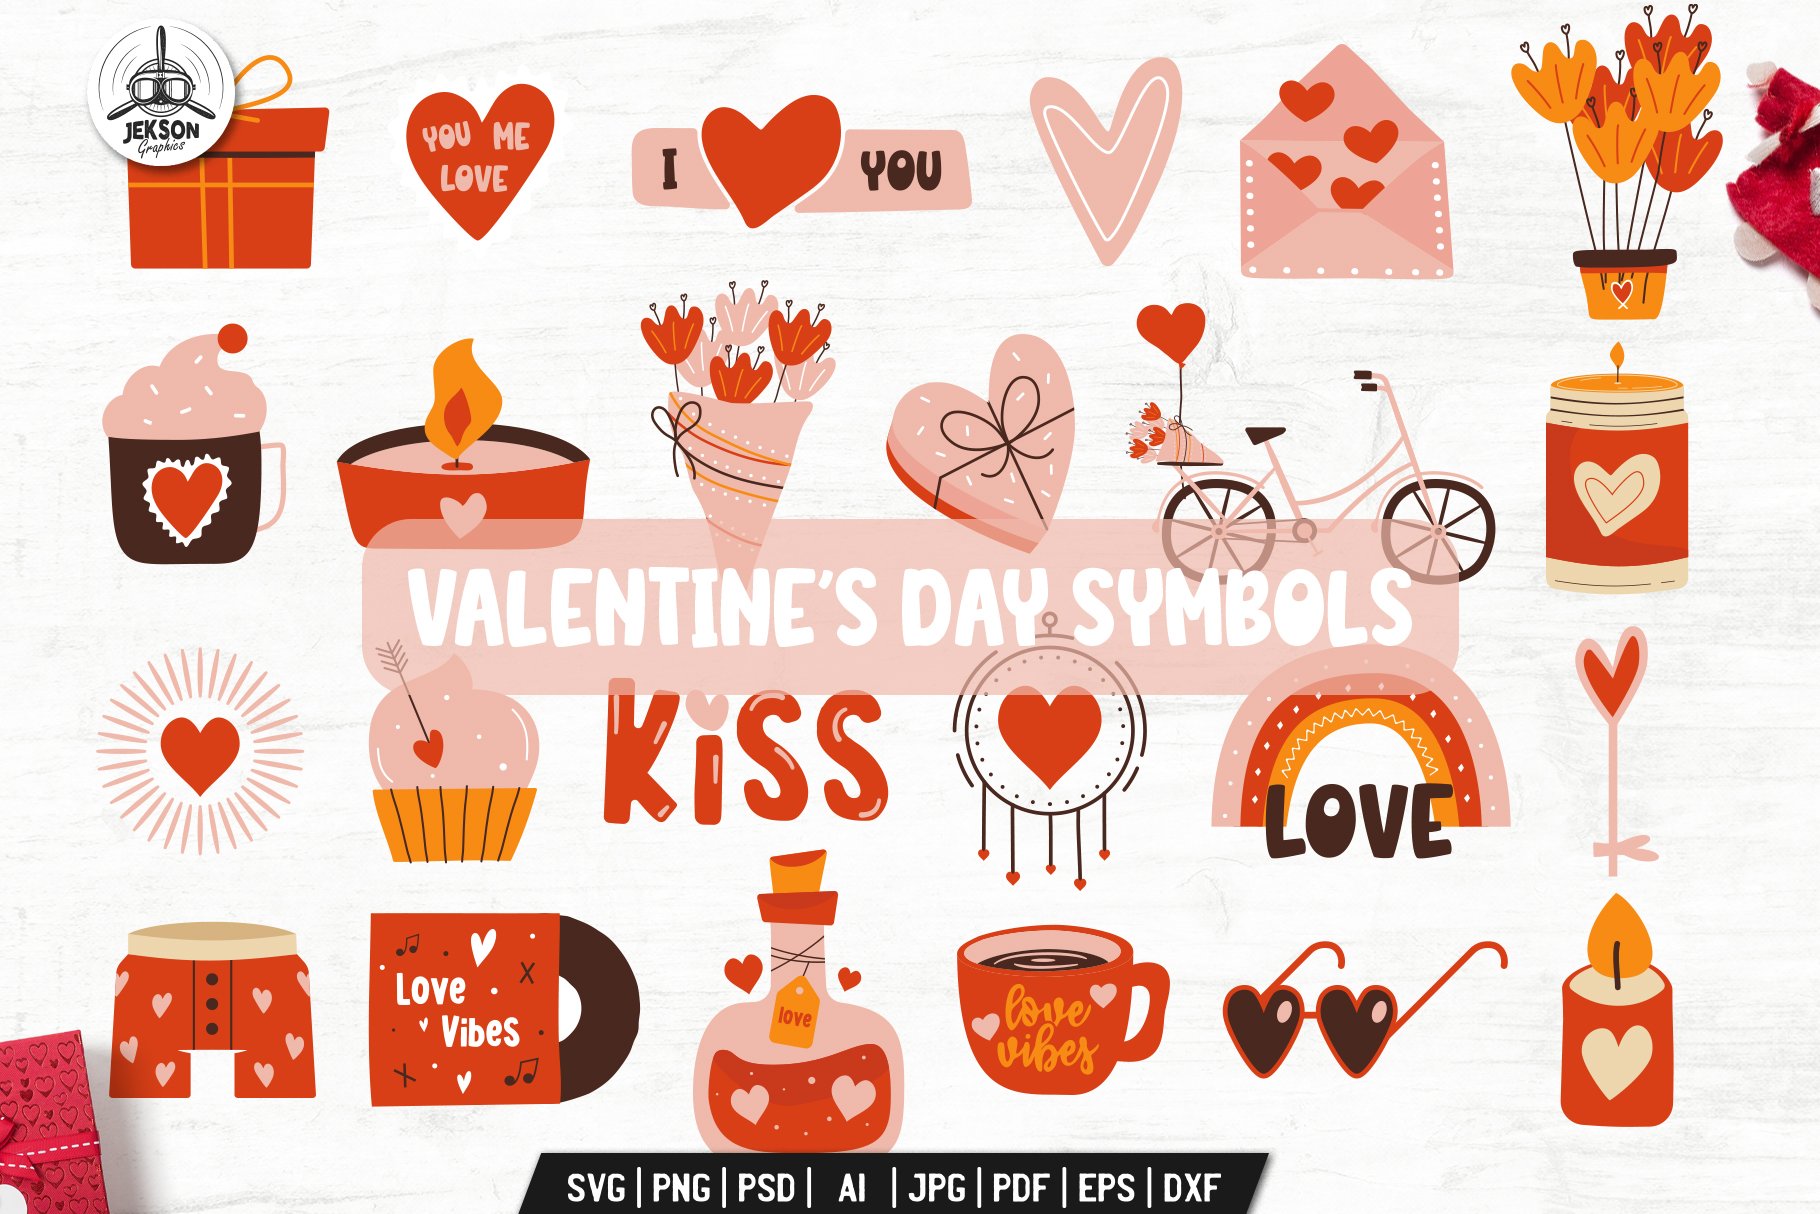 Valentine's Day Graphic Vector in Illustrator, PSD, JPG, PNG, SVG